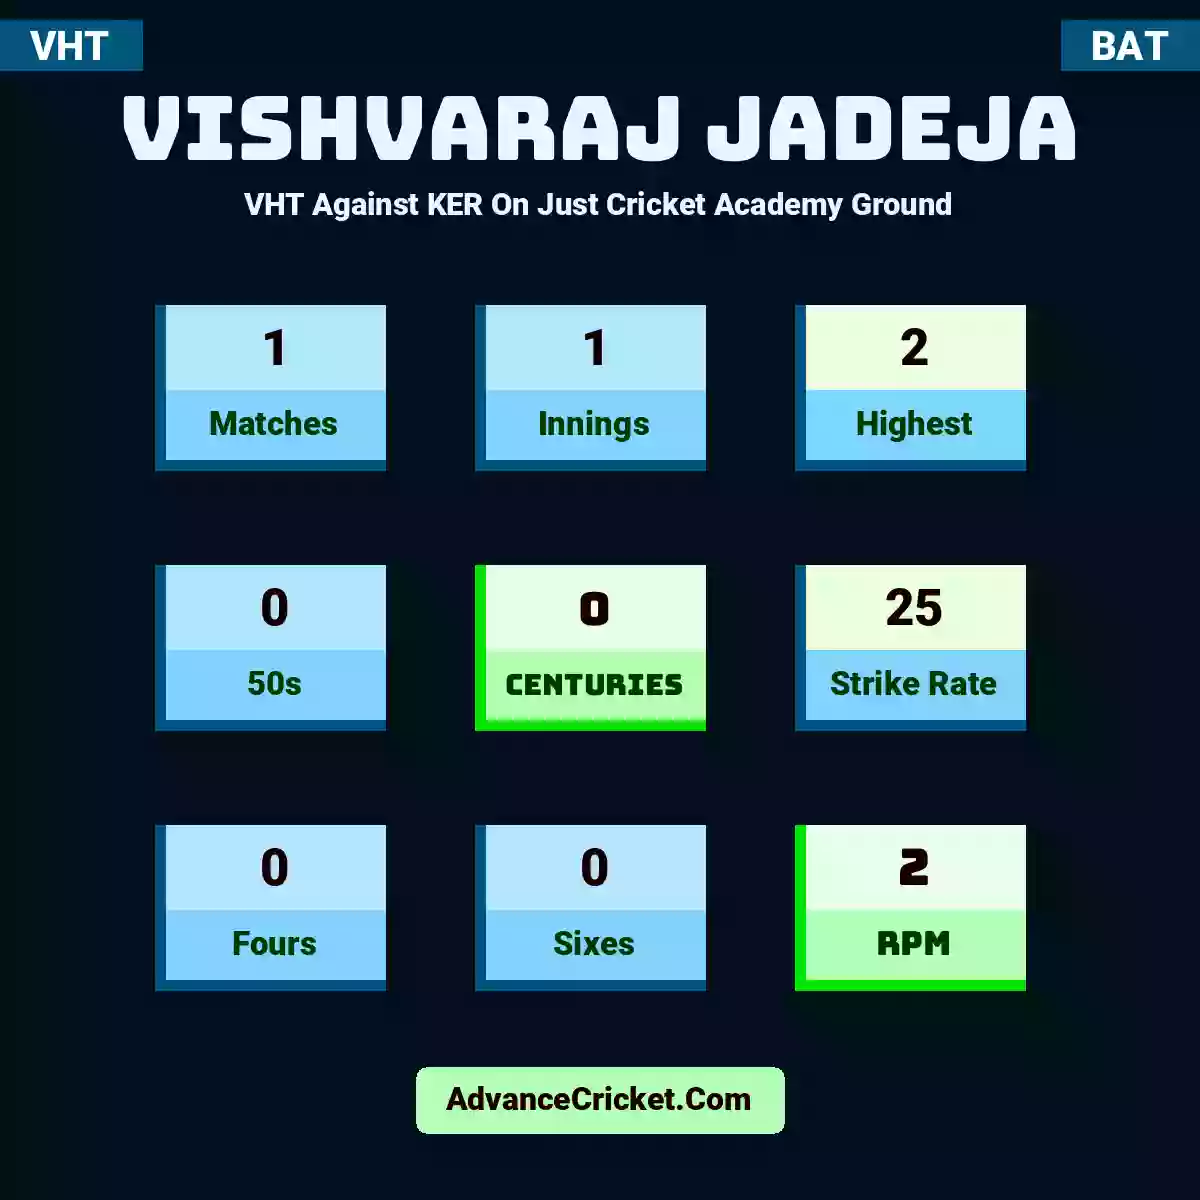 Vishvaraj Jadeja VHT  Against KER On Just Cricket Academy Ground, Vishvaraj Jadeja played 1 matches, scored 2 runs as highest, 0 half-centuries, and 0 centuries, with a strike rate of 25. V.Jadeja hit 0 fours and 0 sixes, with an RPM of 2.